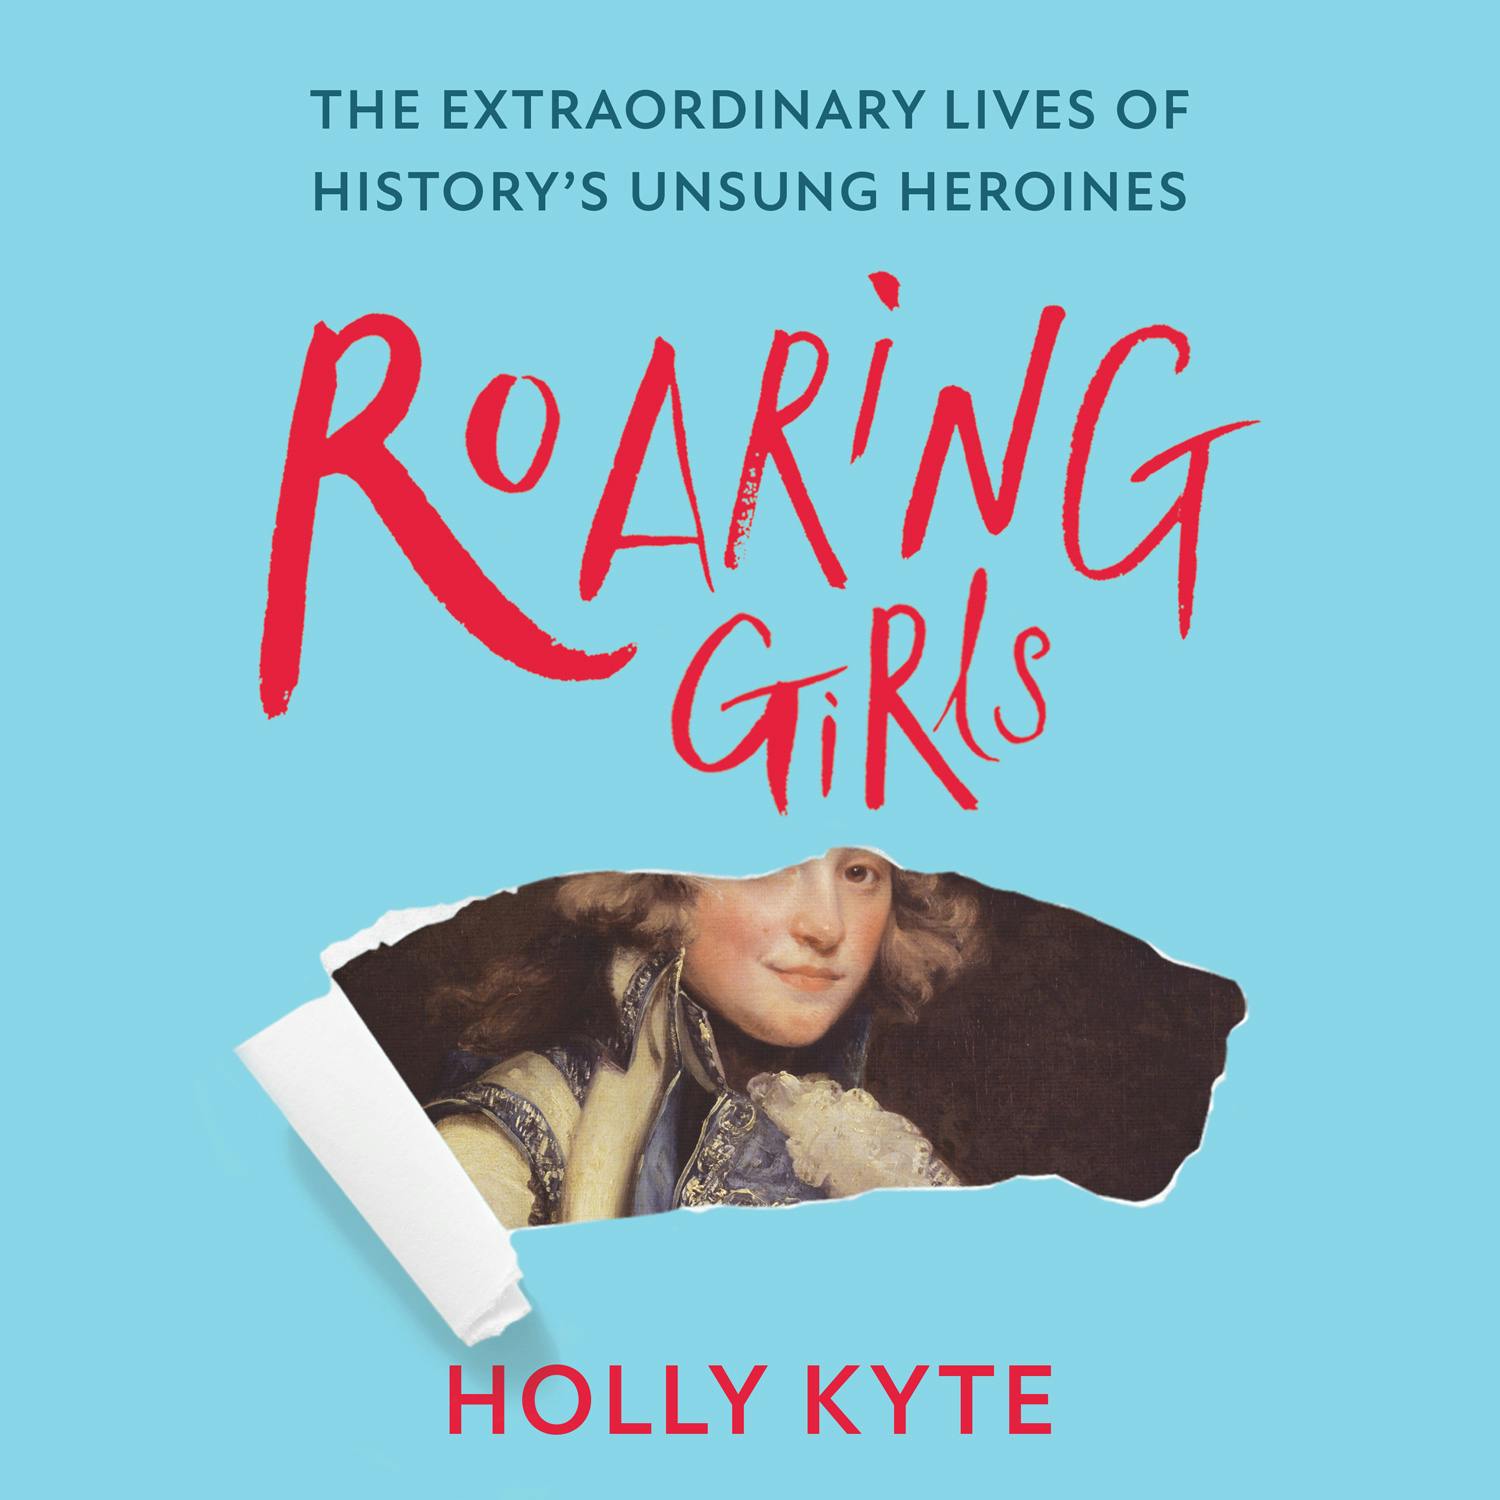 Roaring Girls: The forgotten feminists of British history - Holly Kyte